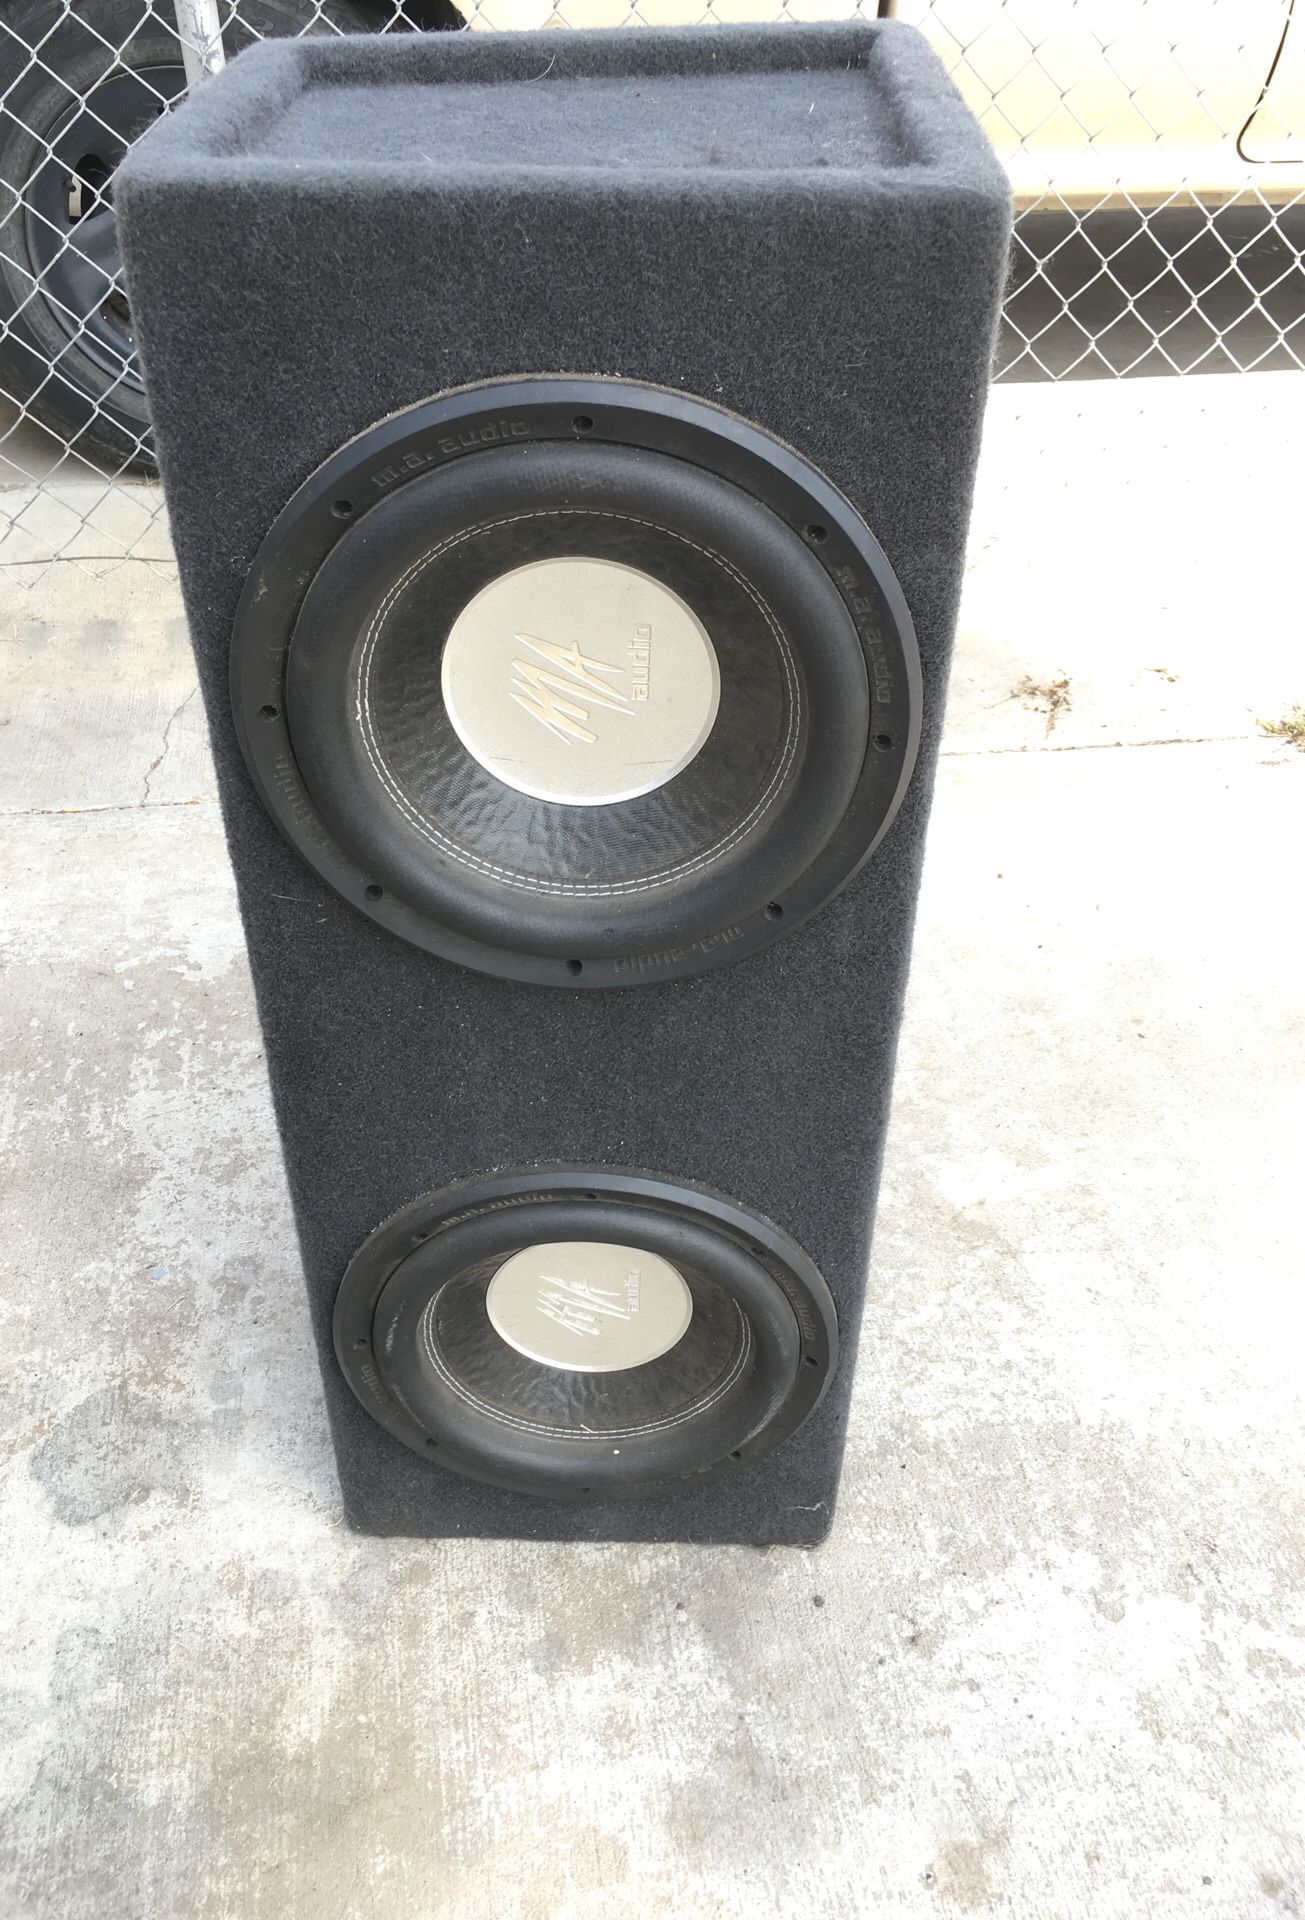 MA audio 10inch speakers